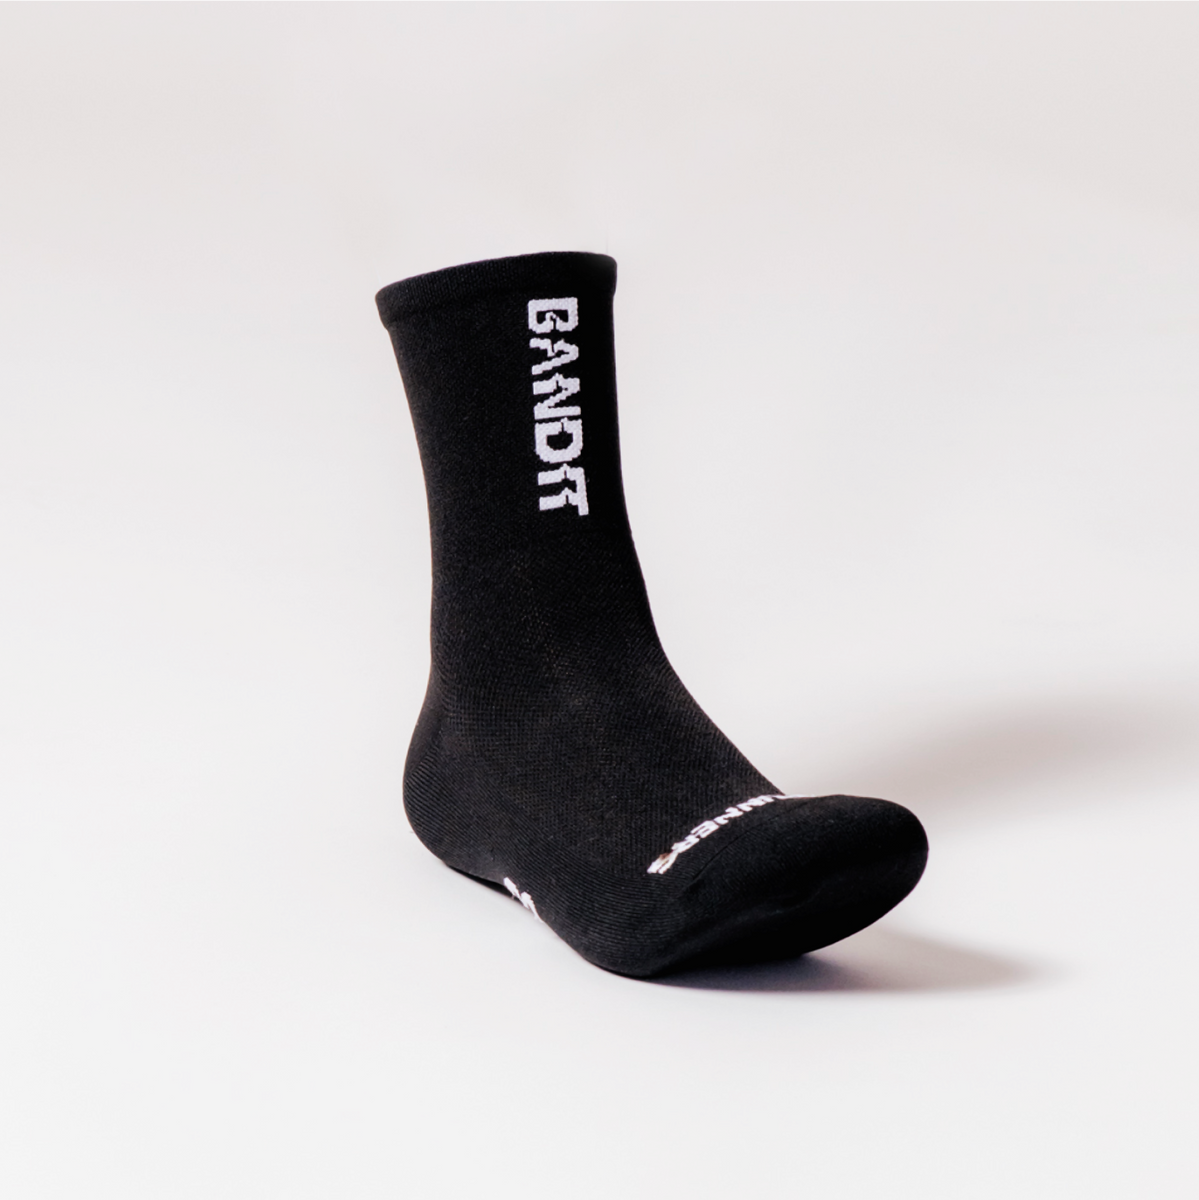 Lite Run Quarter Bandit 2 White - Pack - - Black Socks with Warped